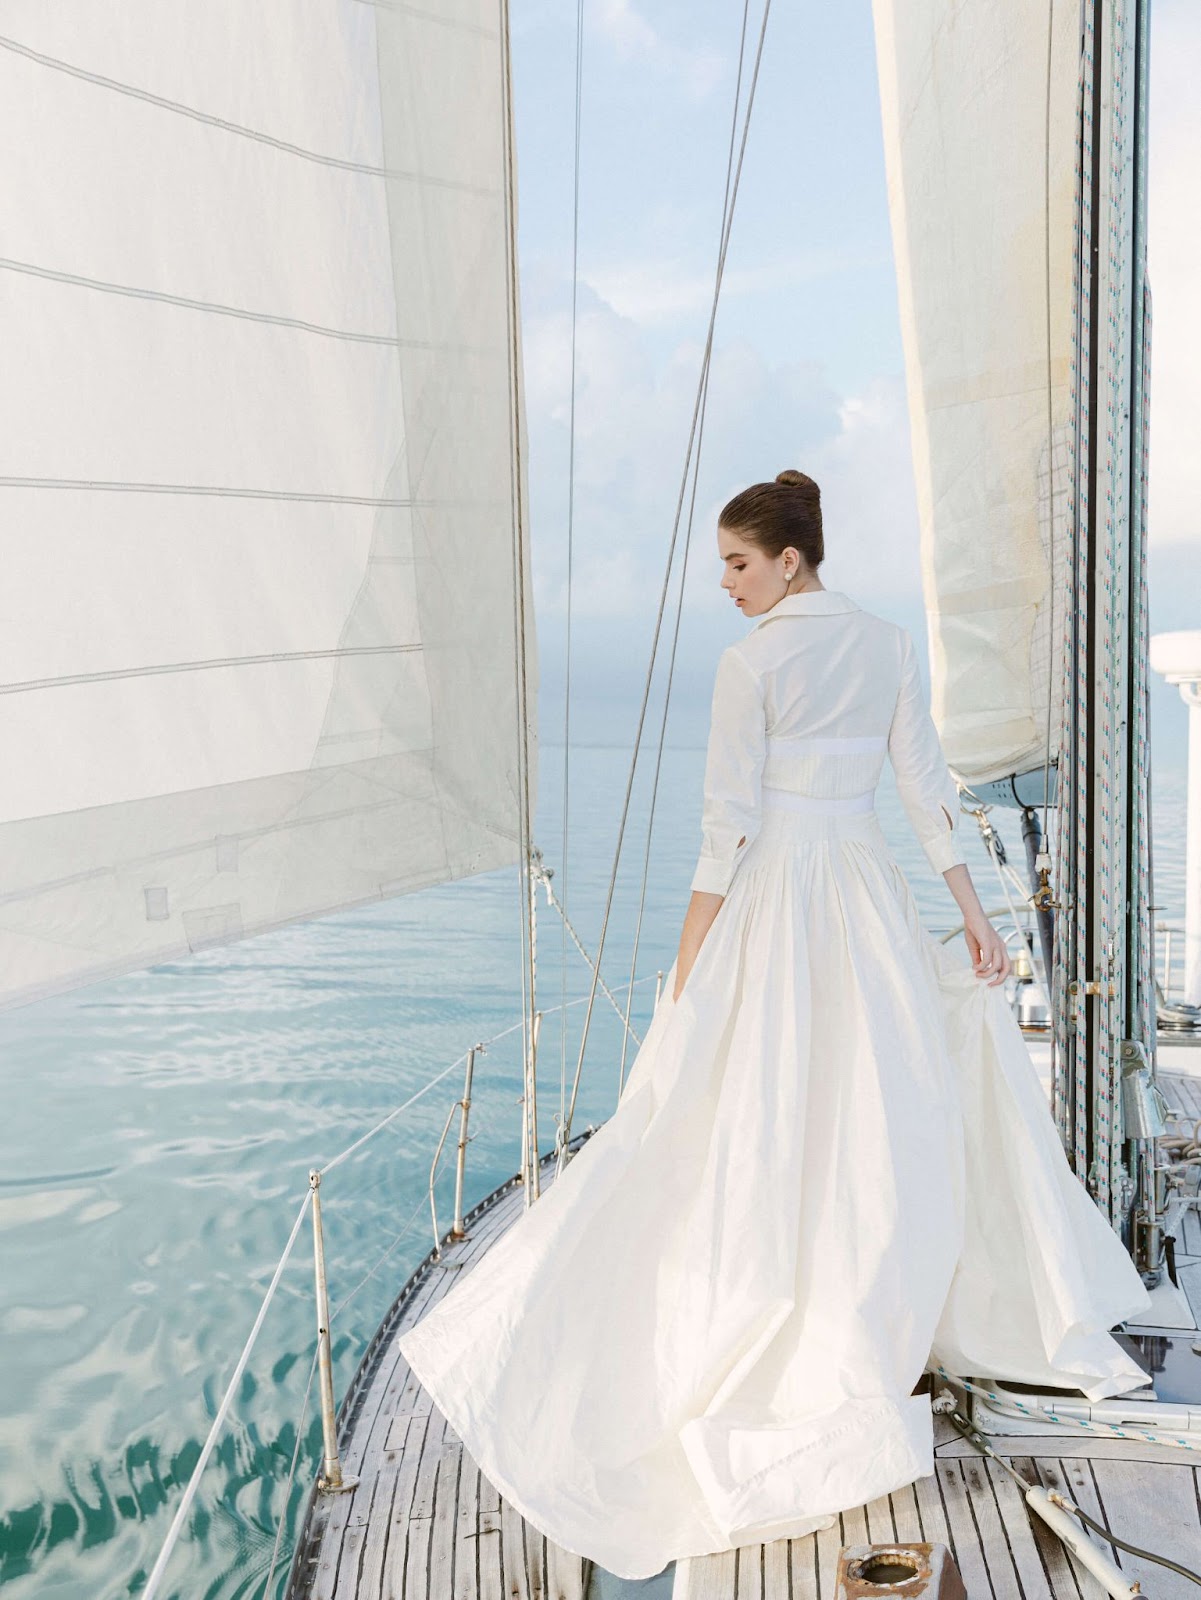 Carolina Herrera bridal gown worn on a sailboat editorial photo shoot